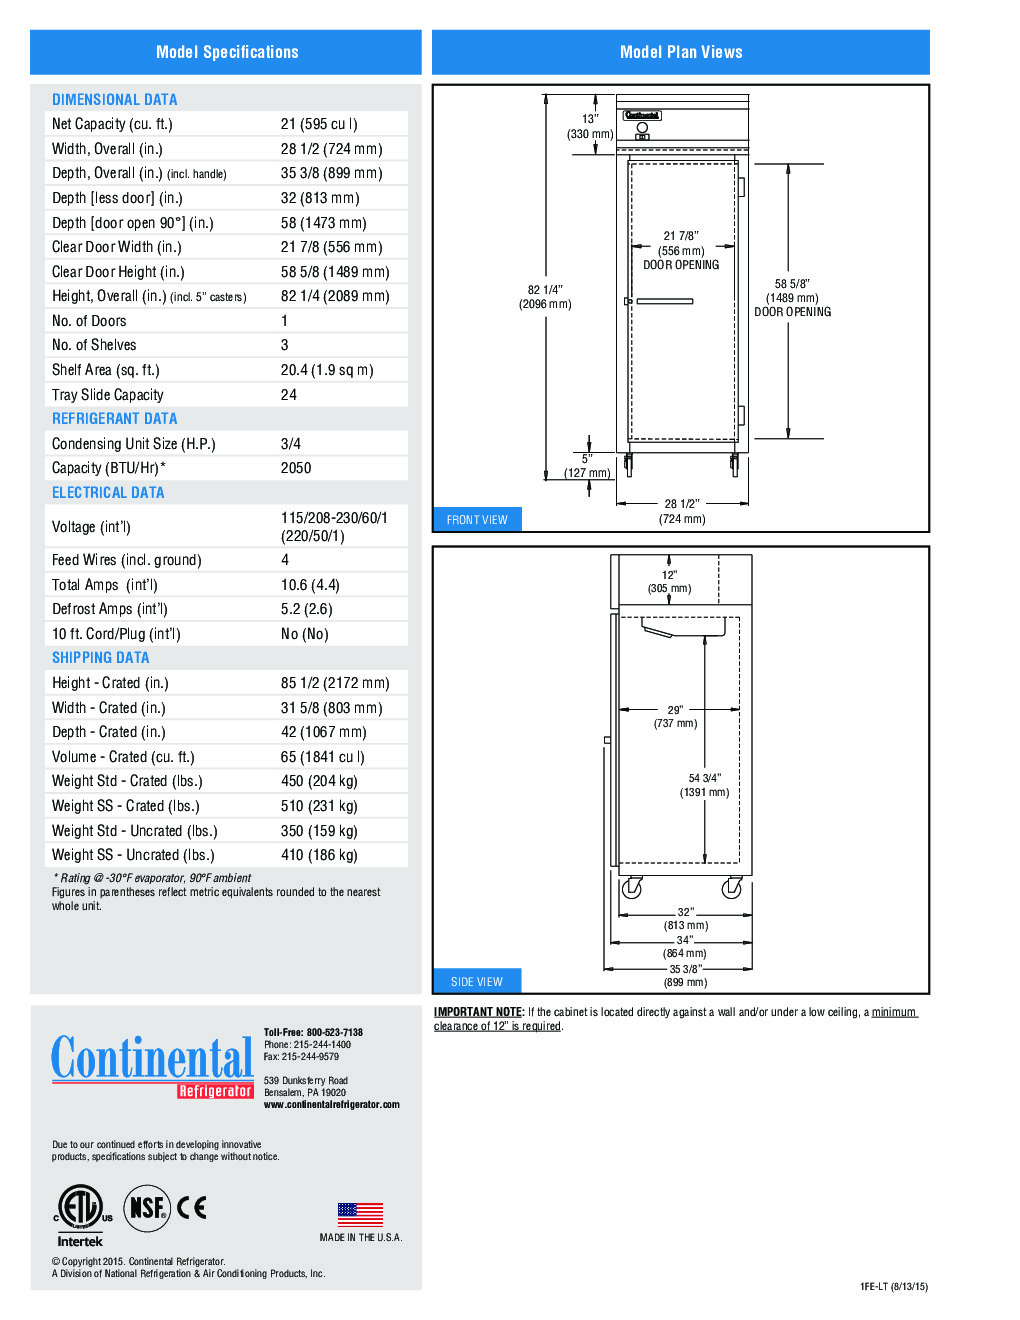 Continental Refrigerator 1FE-LT-SA Reach-In Low Temperature Freezer